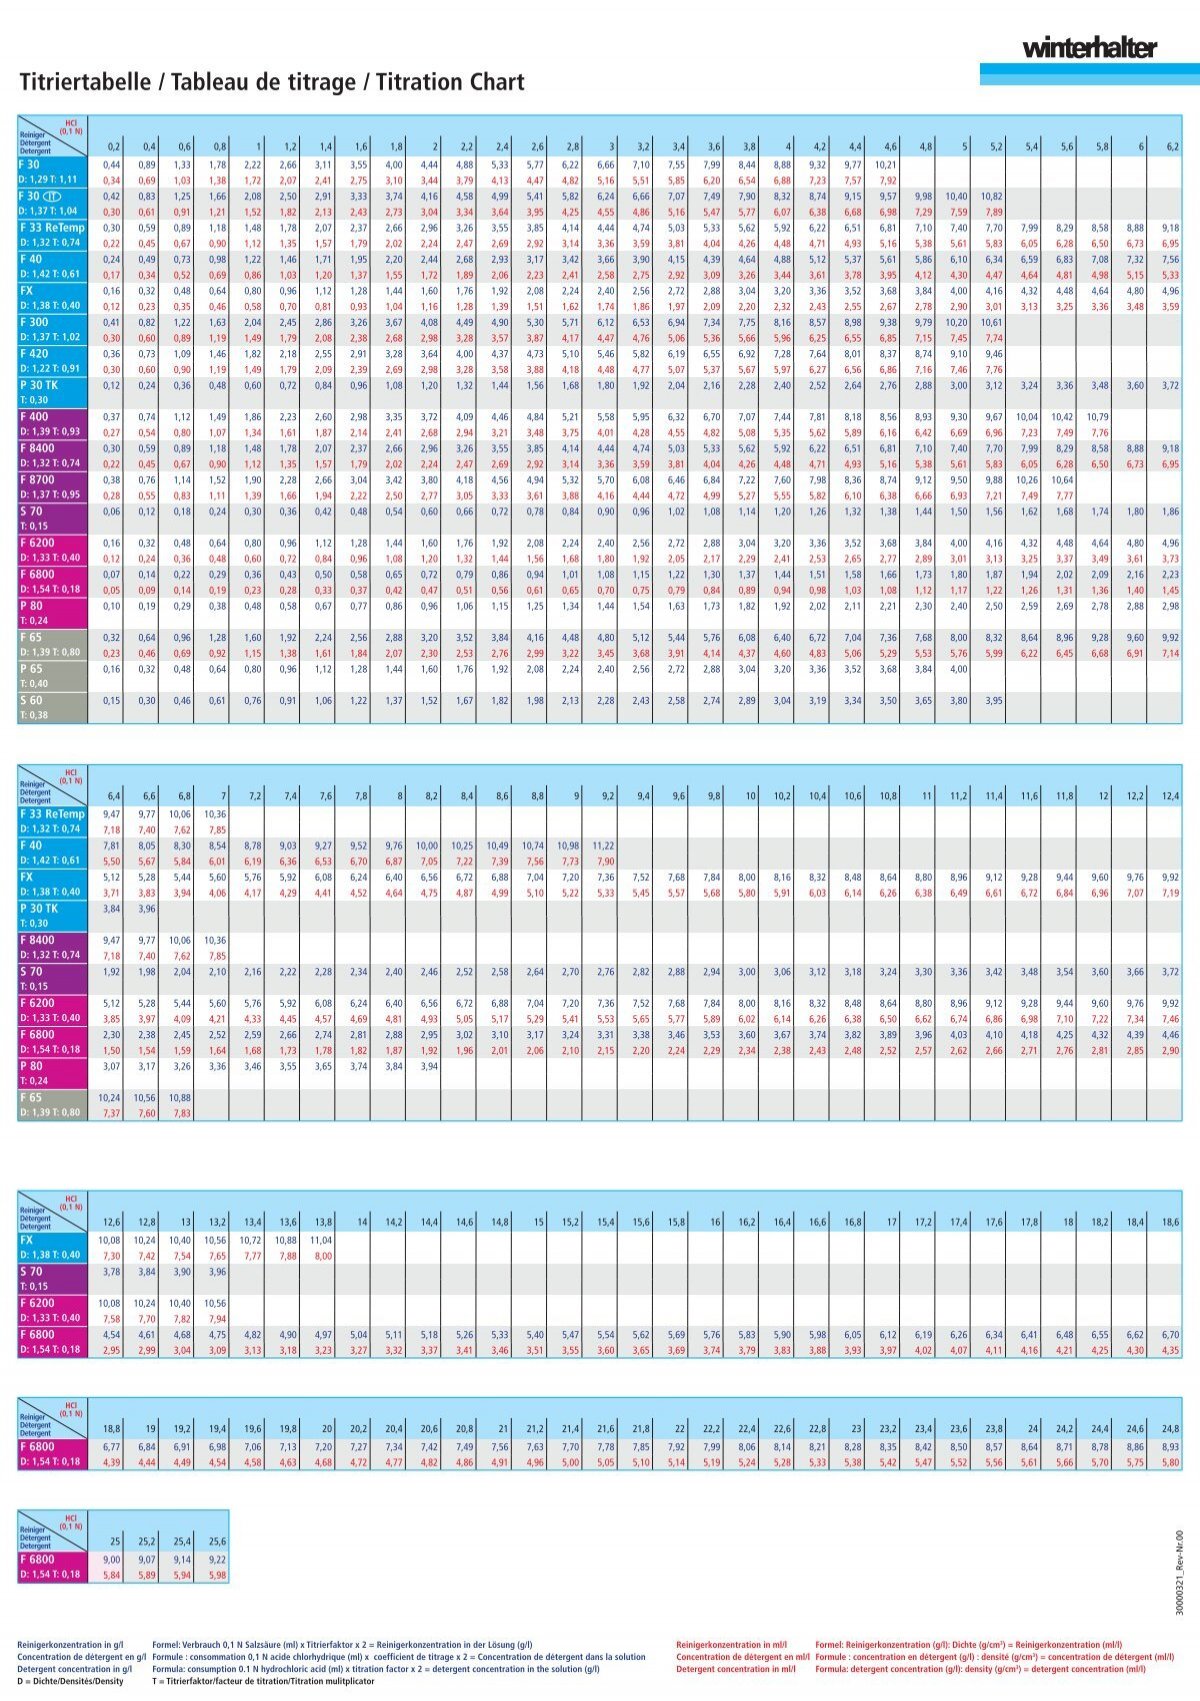 Titration Chart